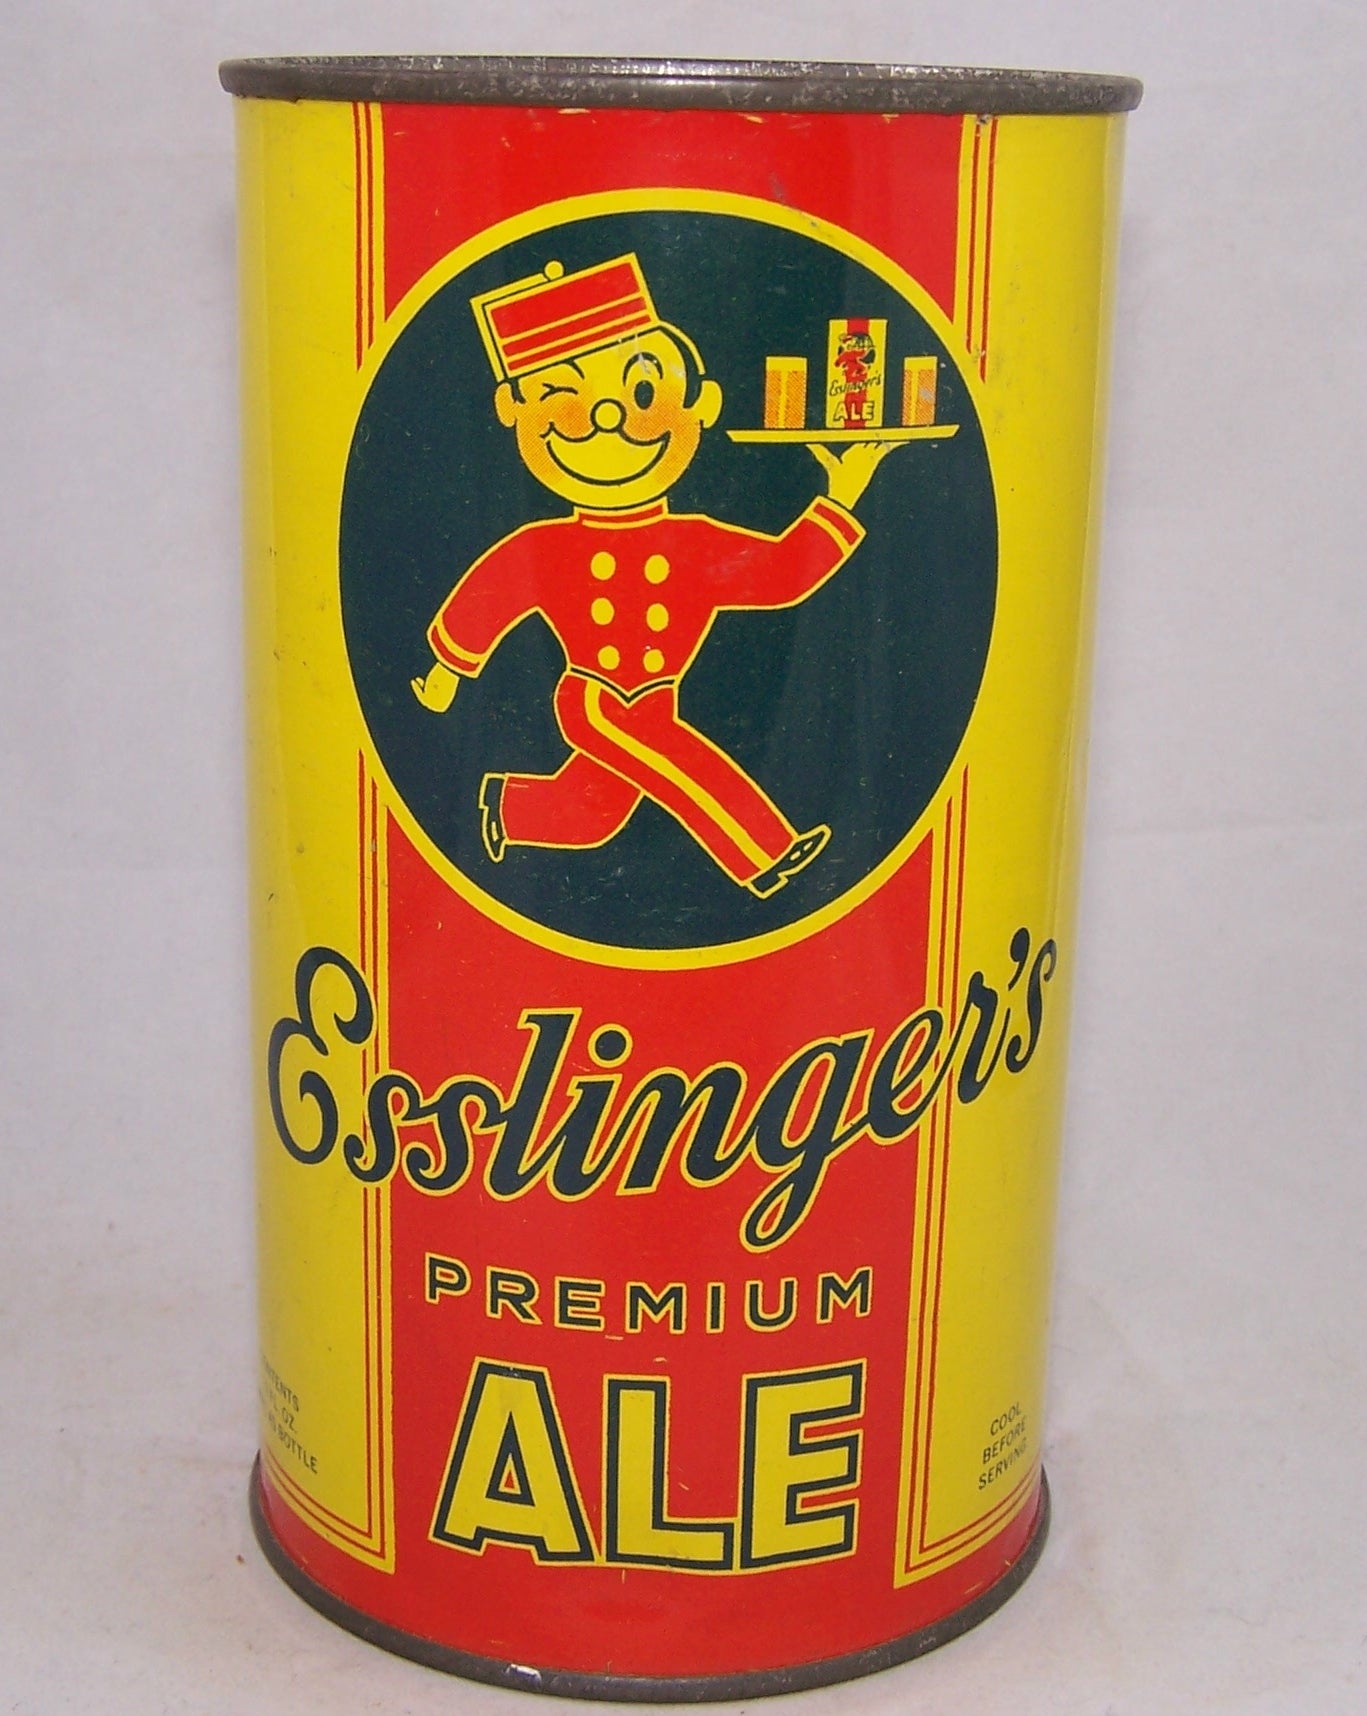 Esslinger's Premium Ale Quart, USBC 208-11, Grade 1/1+ to A1+Sold on 04/06/19